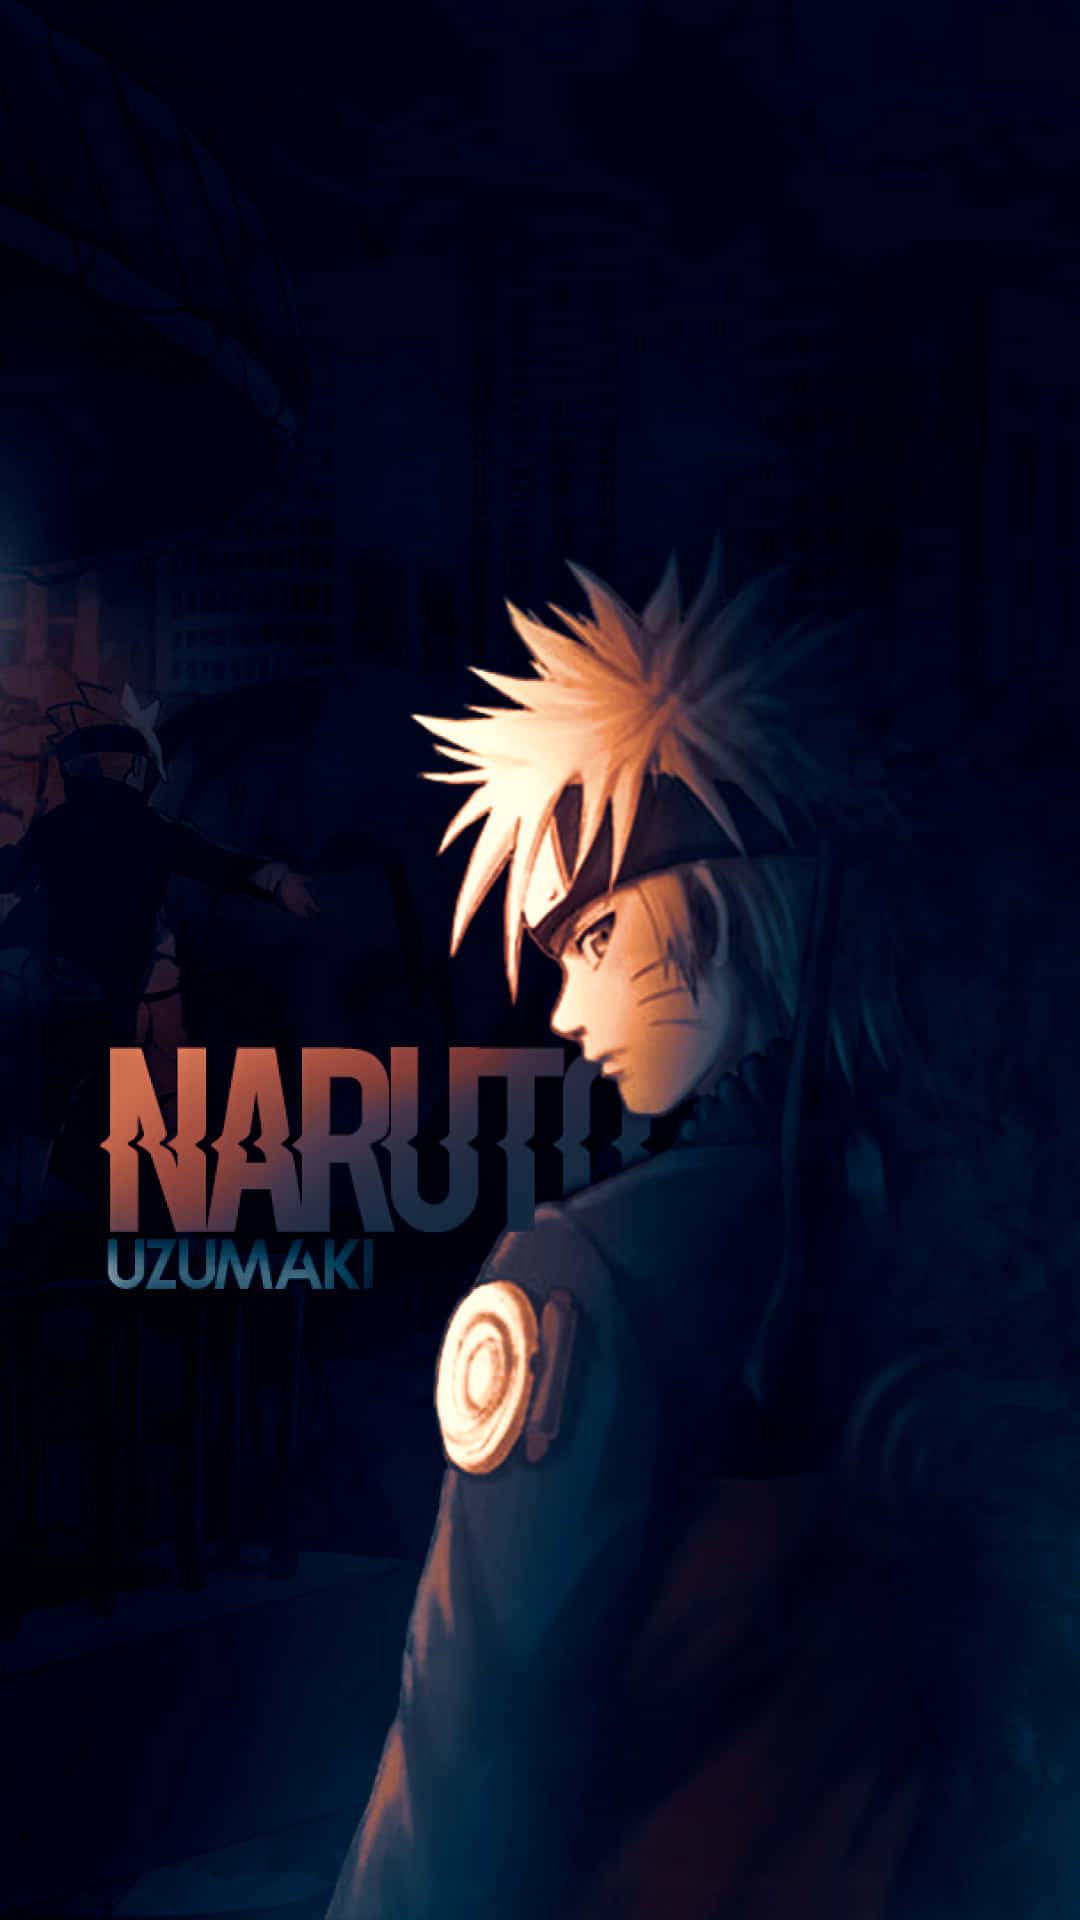 The Legendary Naruto Uzumaki Unleashing His Power